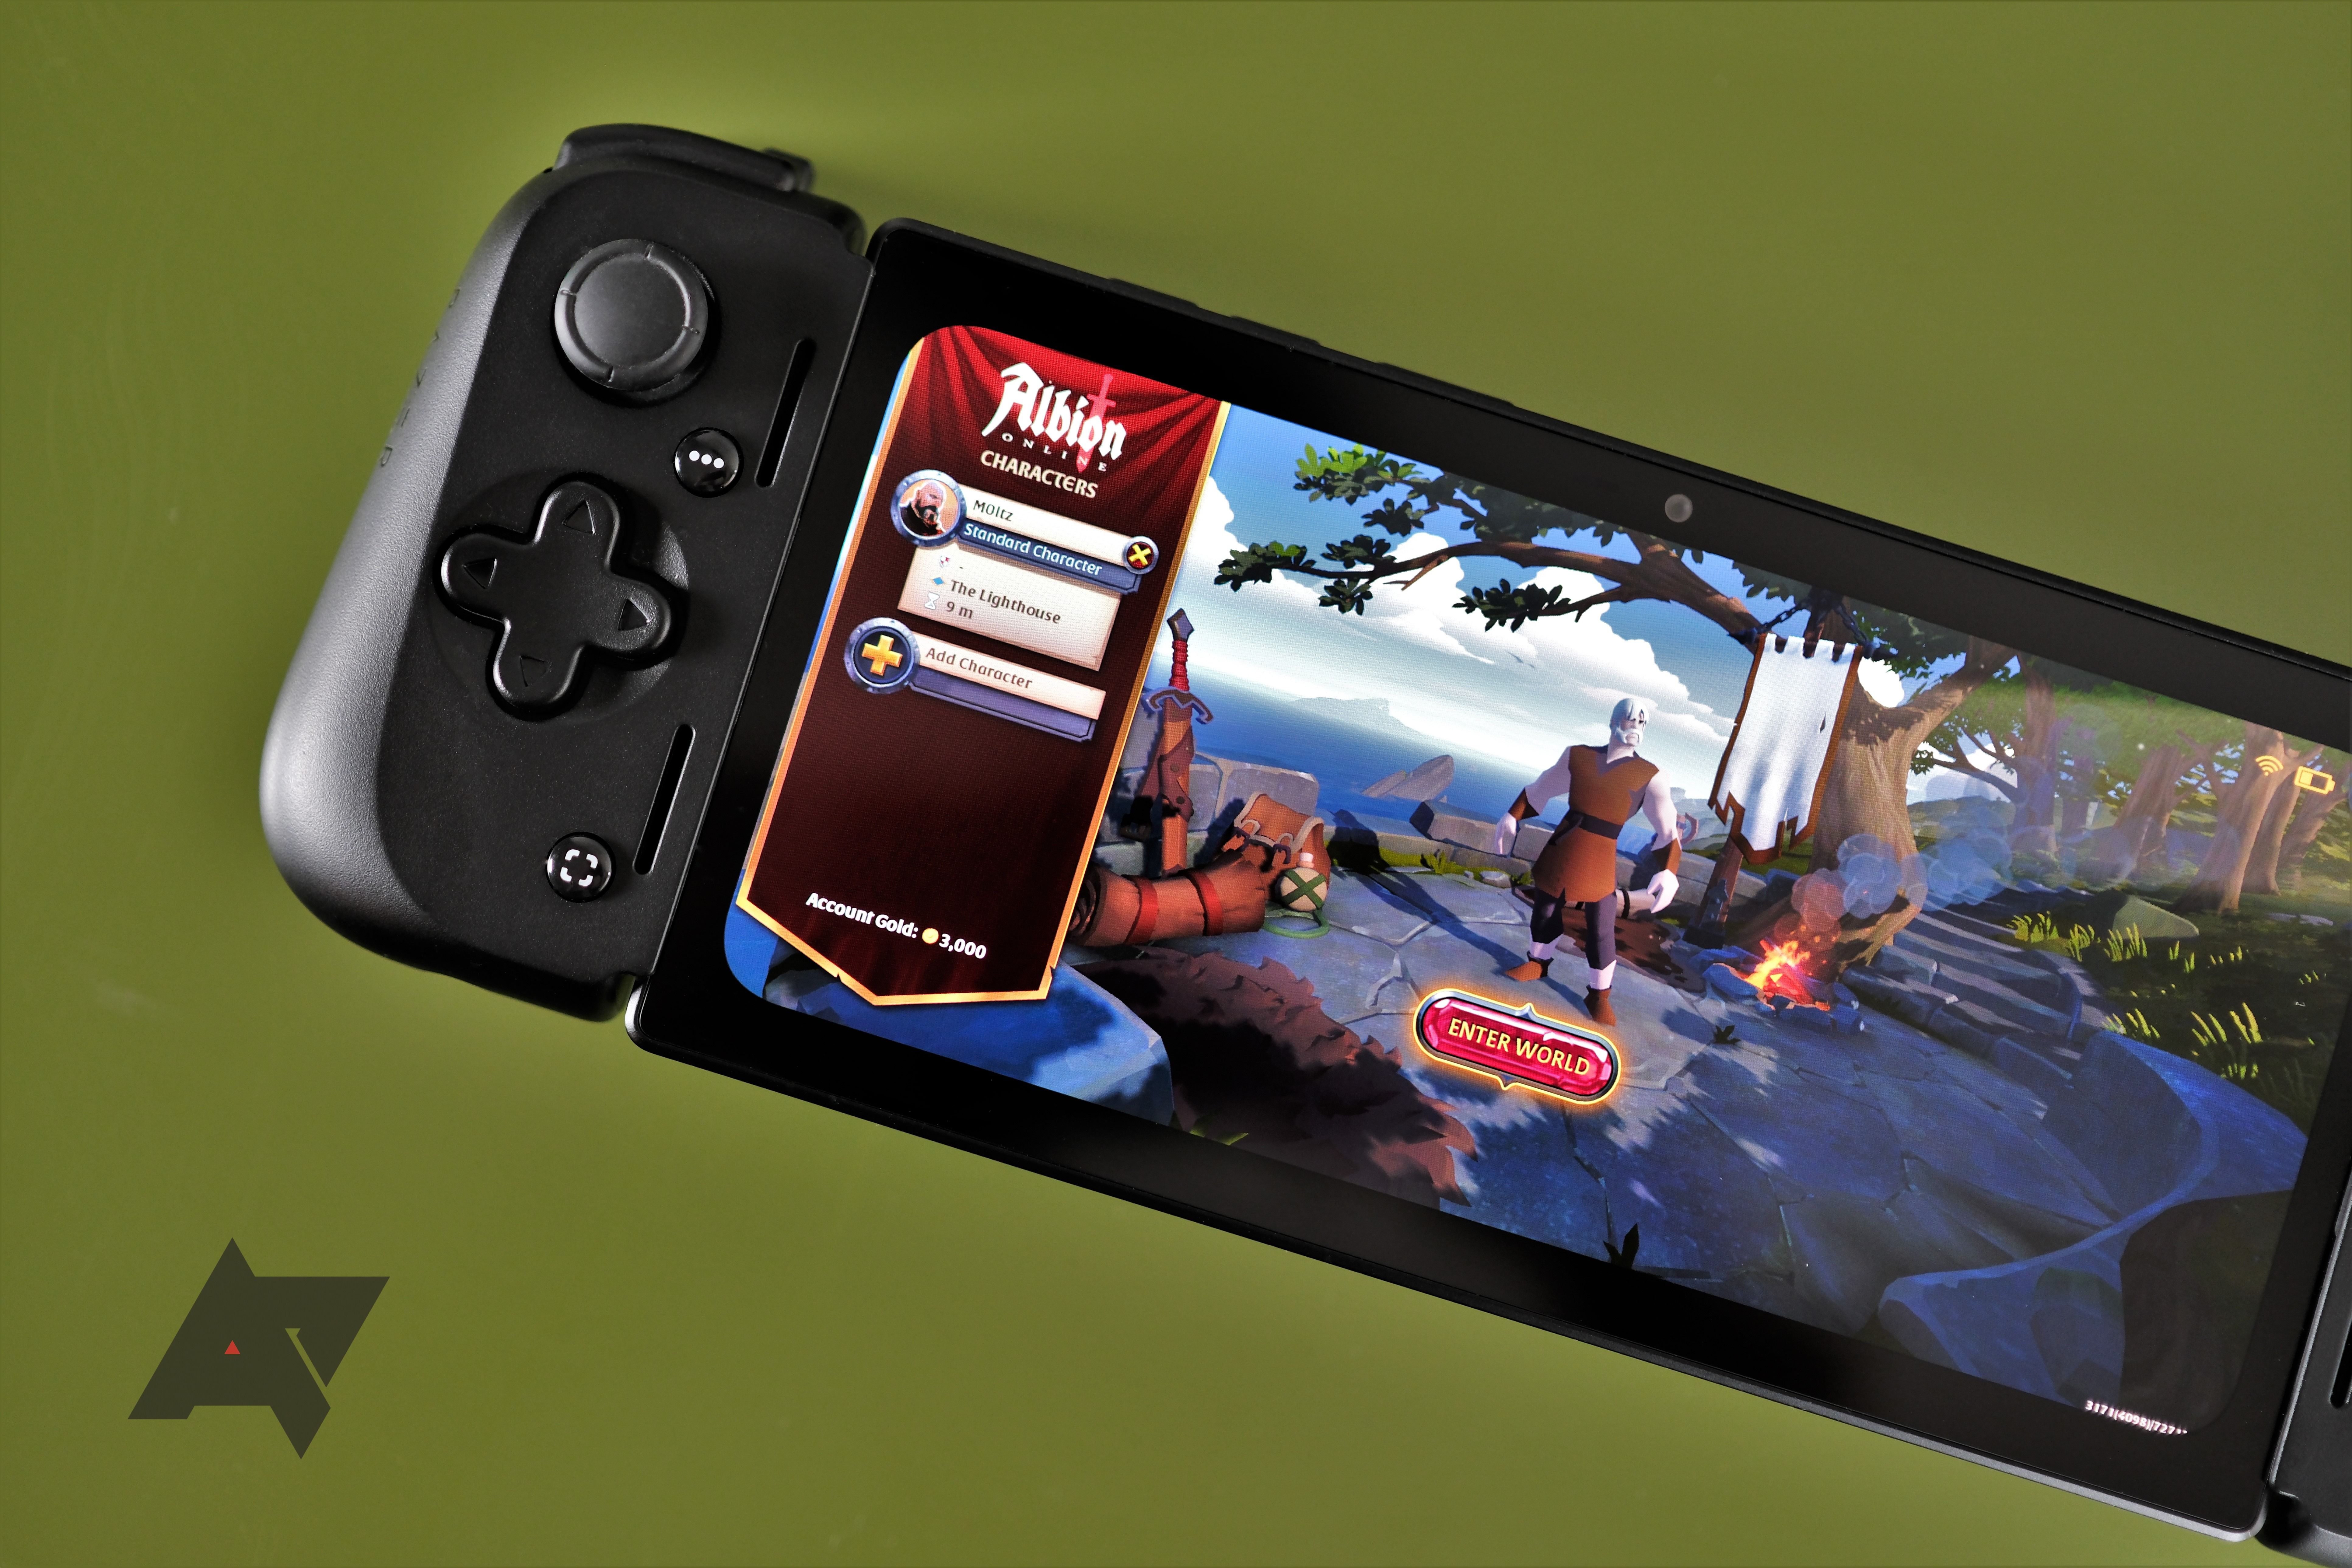 Razer Edge mostrando gameplay de Albion online